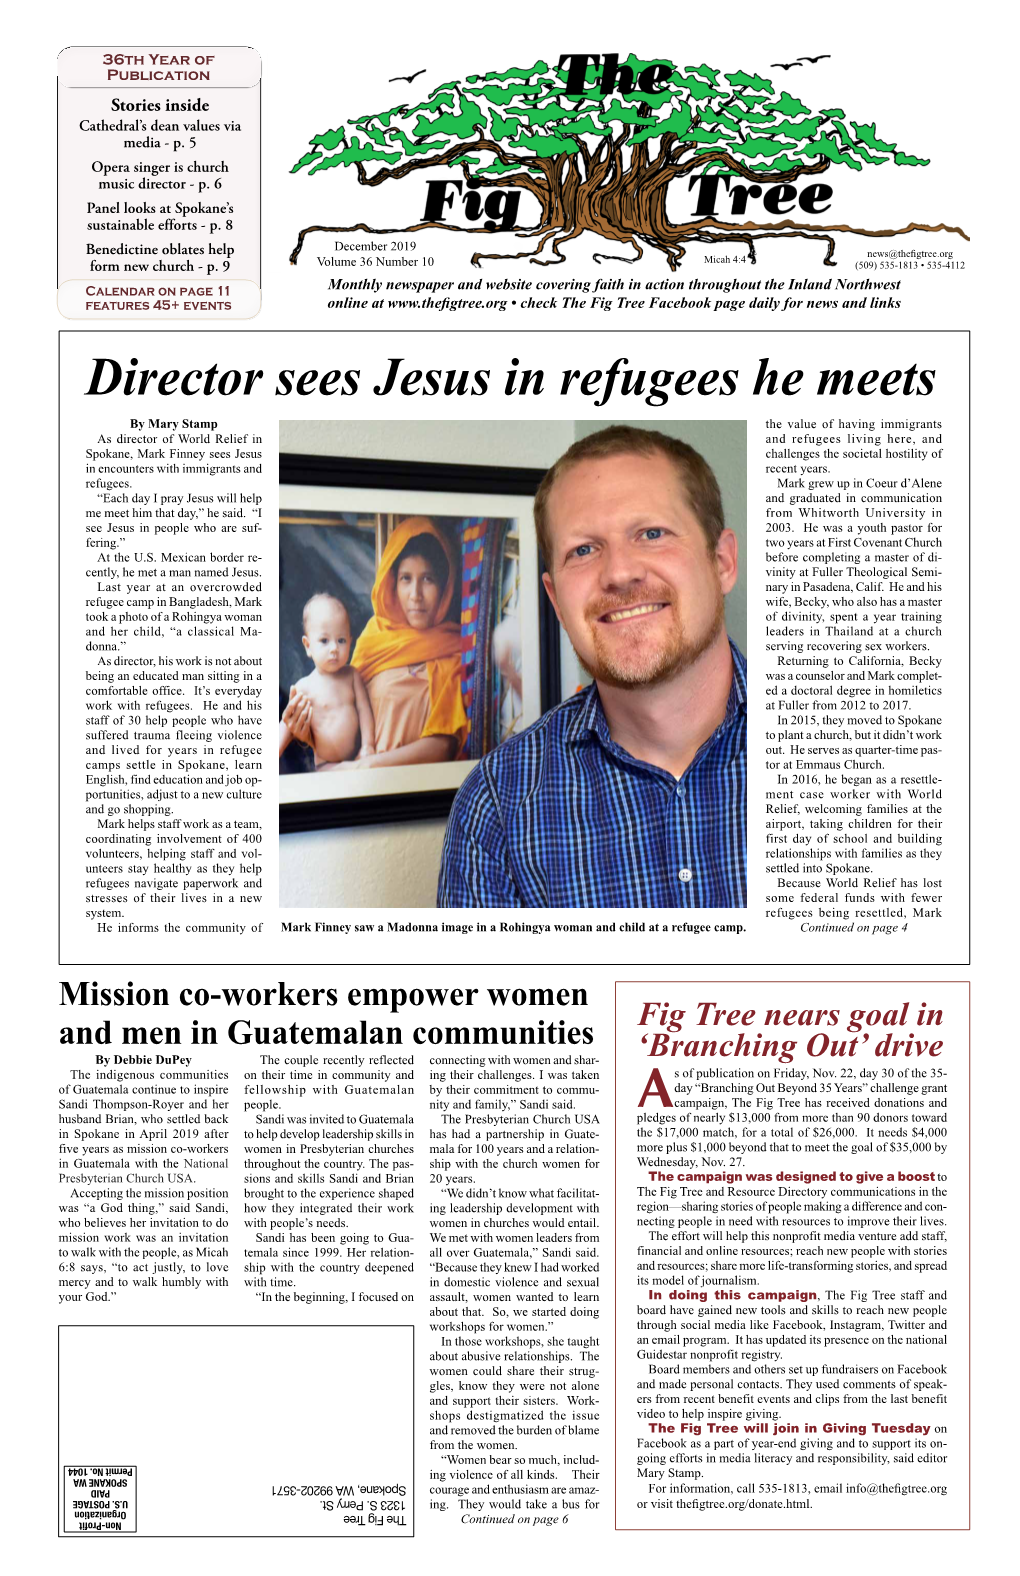 Director Sees Jesus in Refugees He Meets